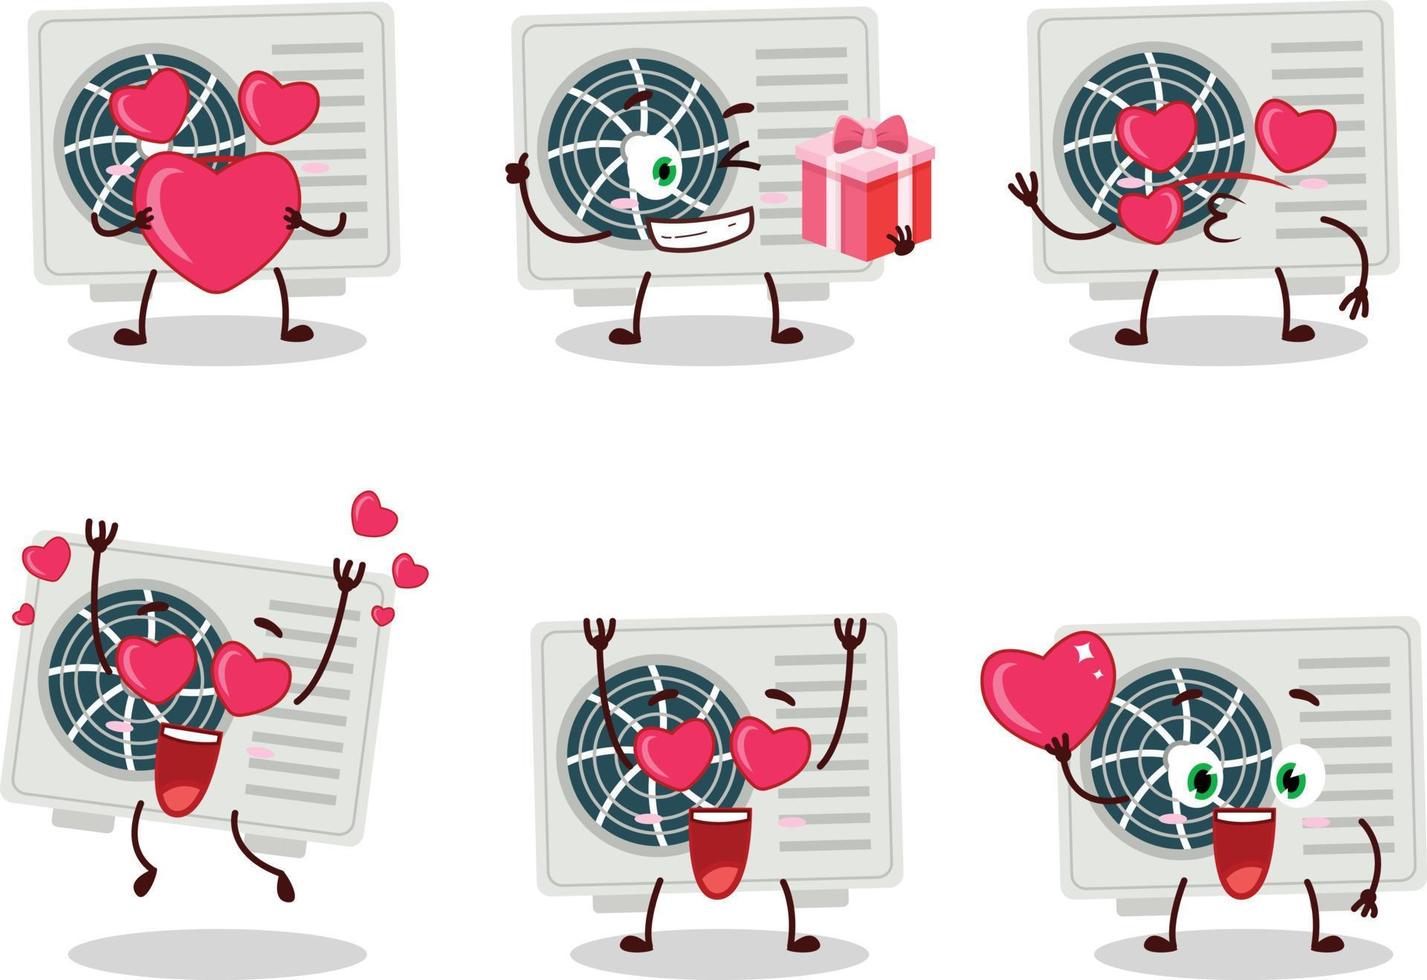 Air conditioner cartoon character with love cute emoticon vector